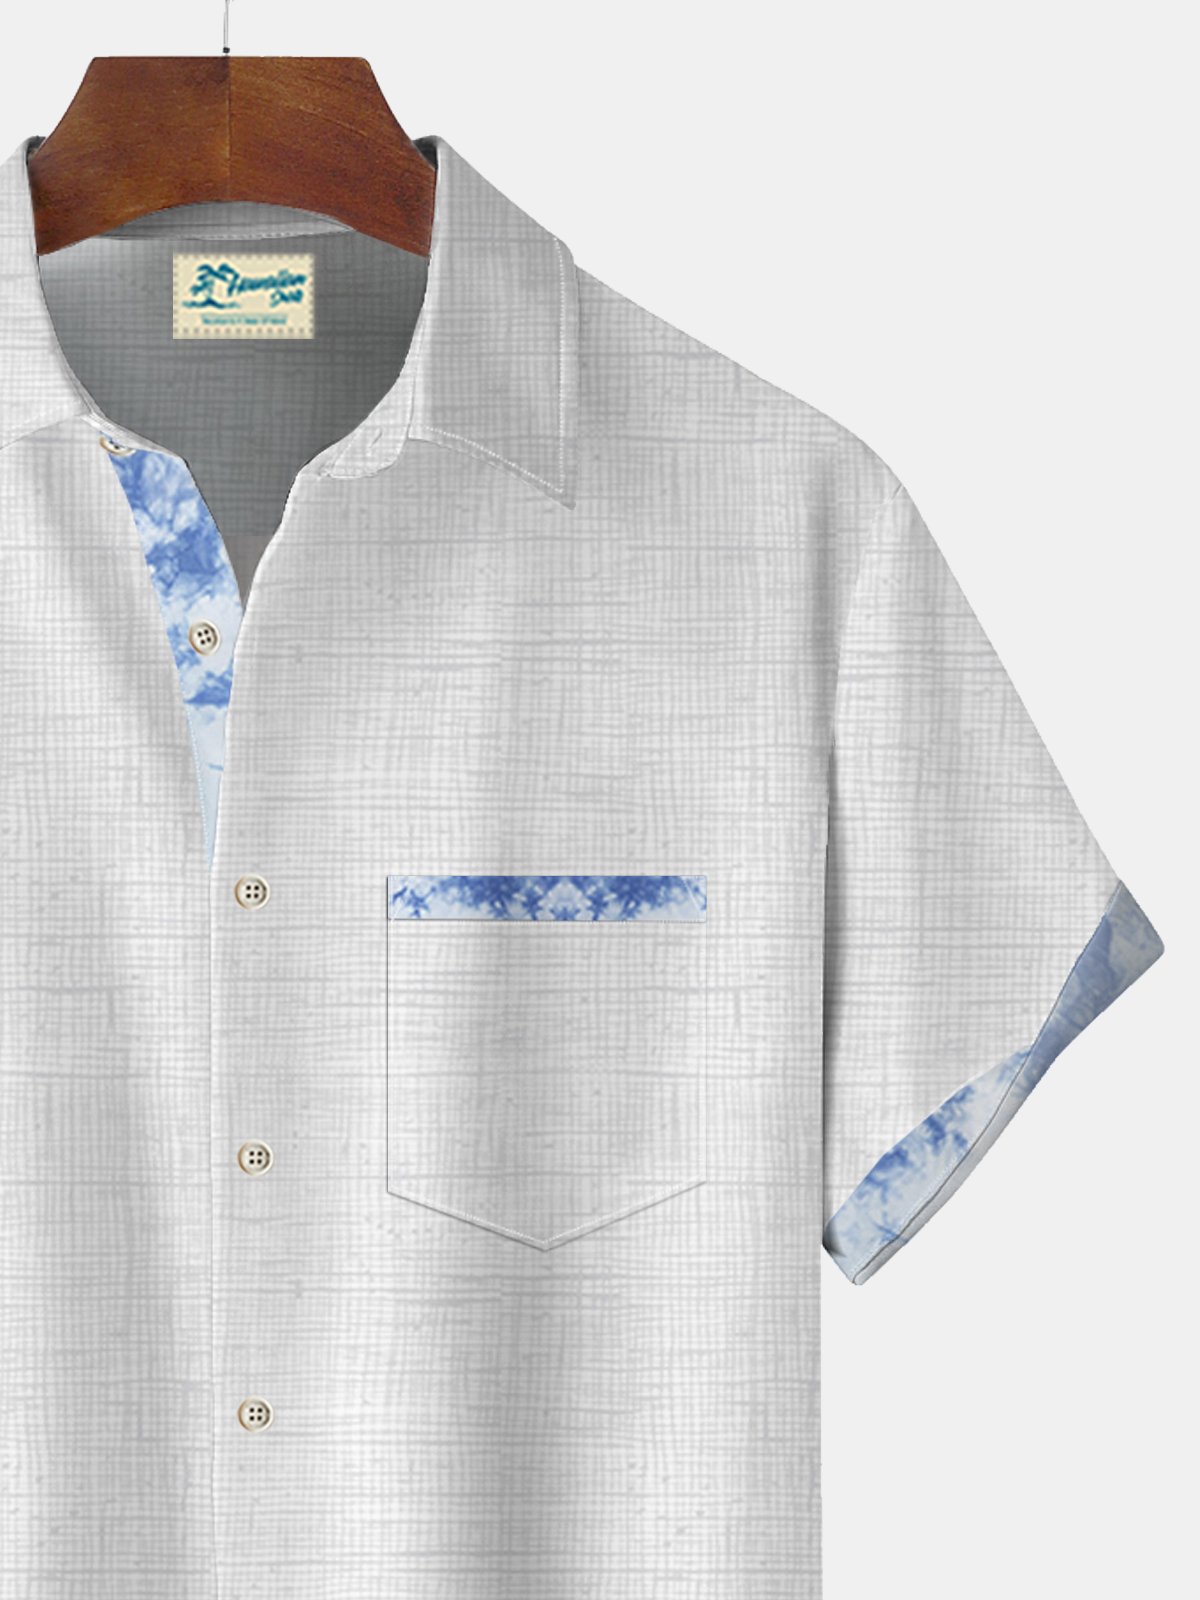 Royaura Basics Textured Contrast Print Men's Button-Pocket Shirt